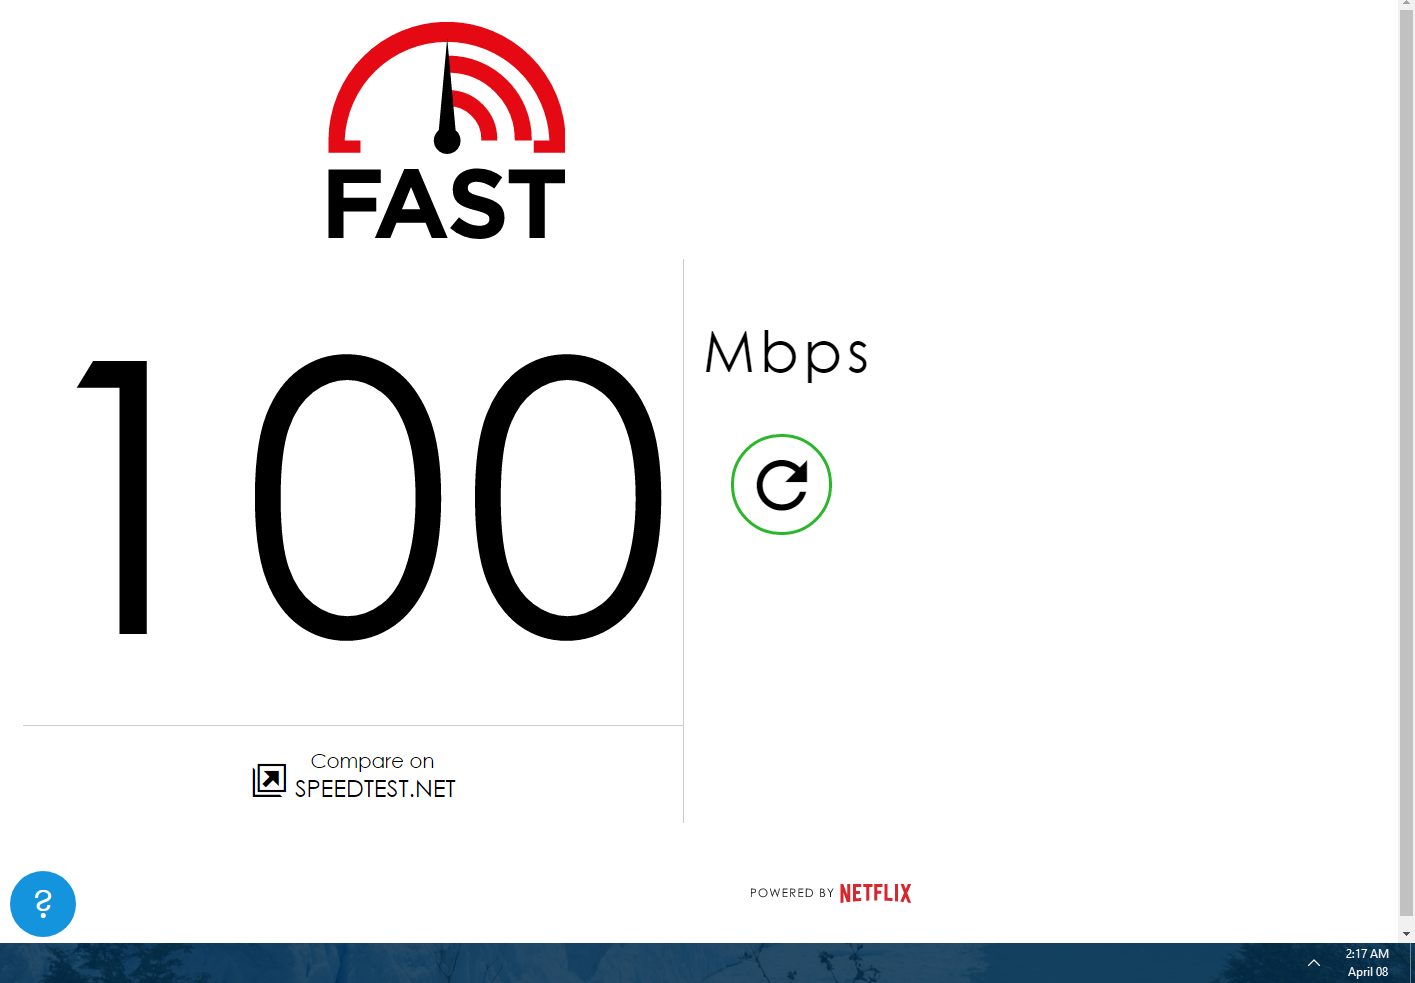 Https is faster. Fast.com скорость. Fast.com. Fast.com Internet Speed Test. 100/100 (Mbps).